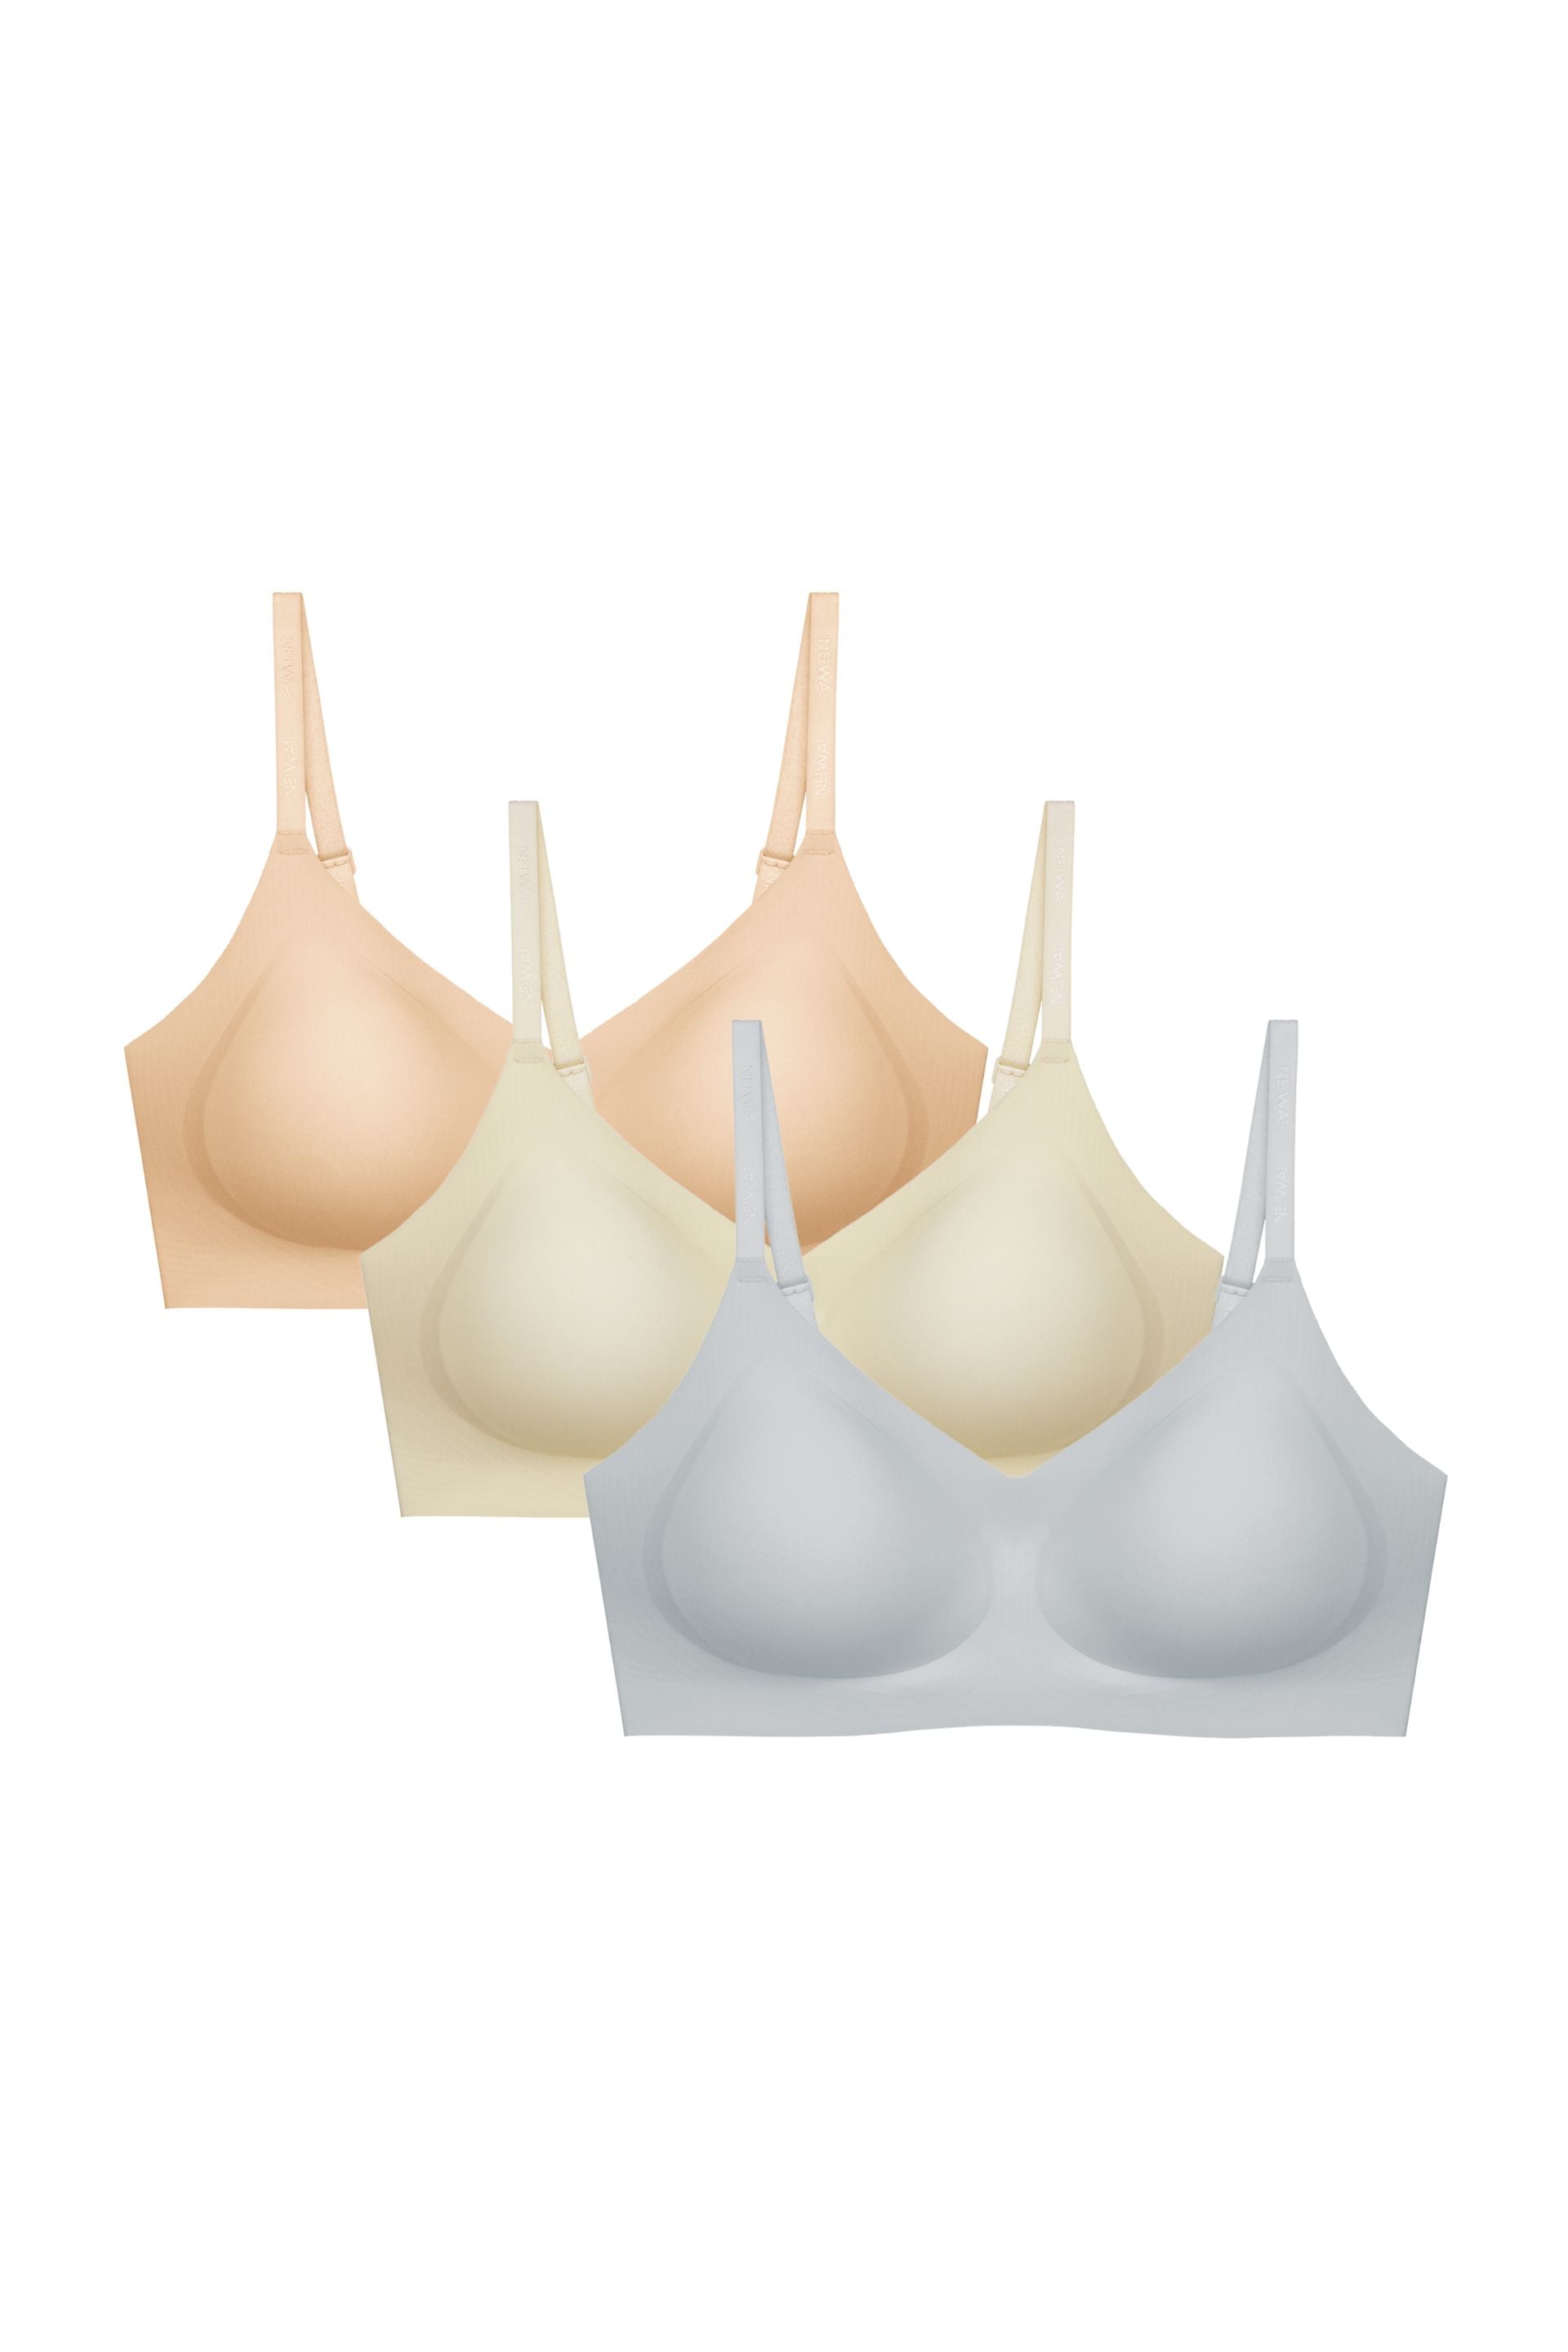 34DDD Womens Seamless Bras - Underwear, Clothing